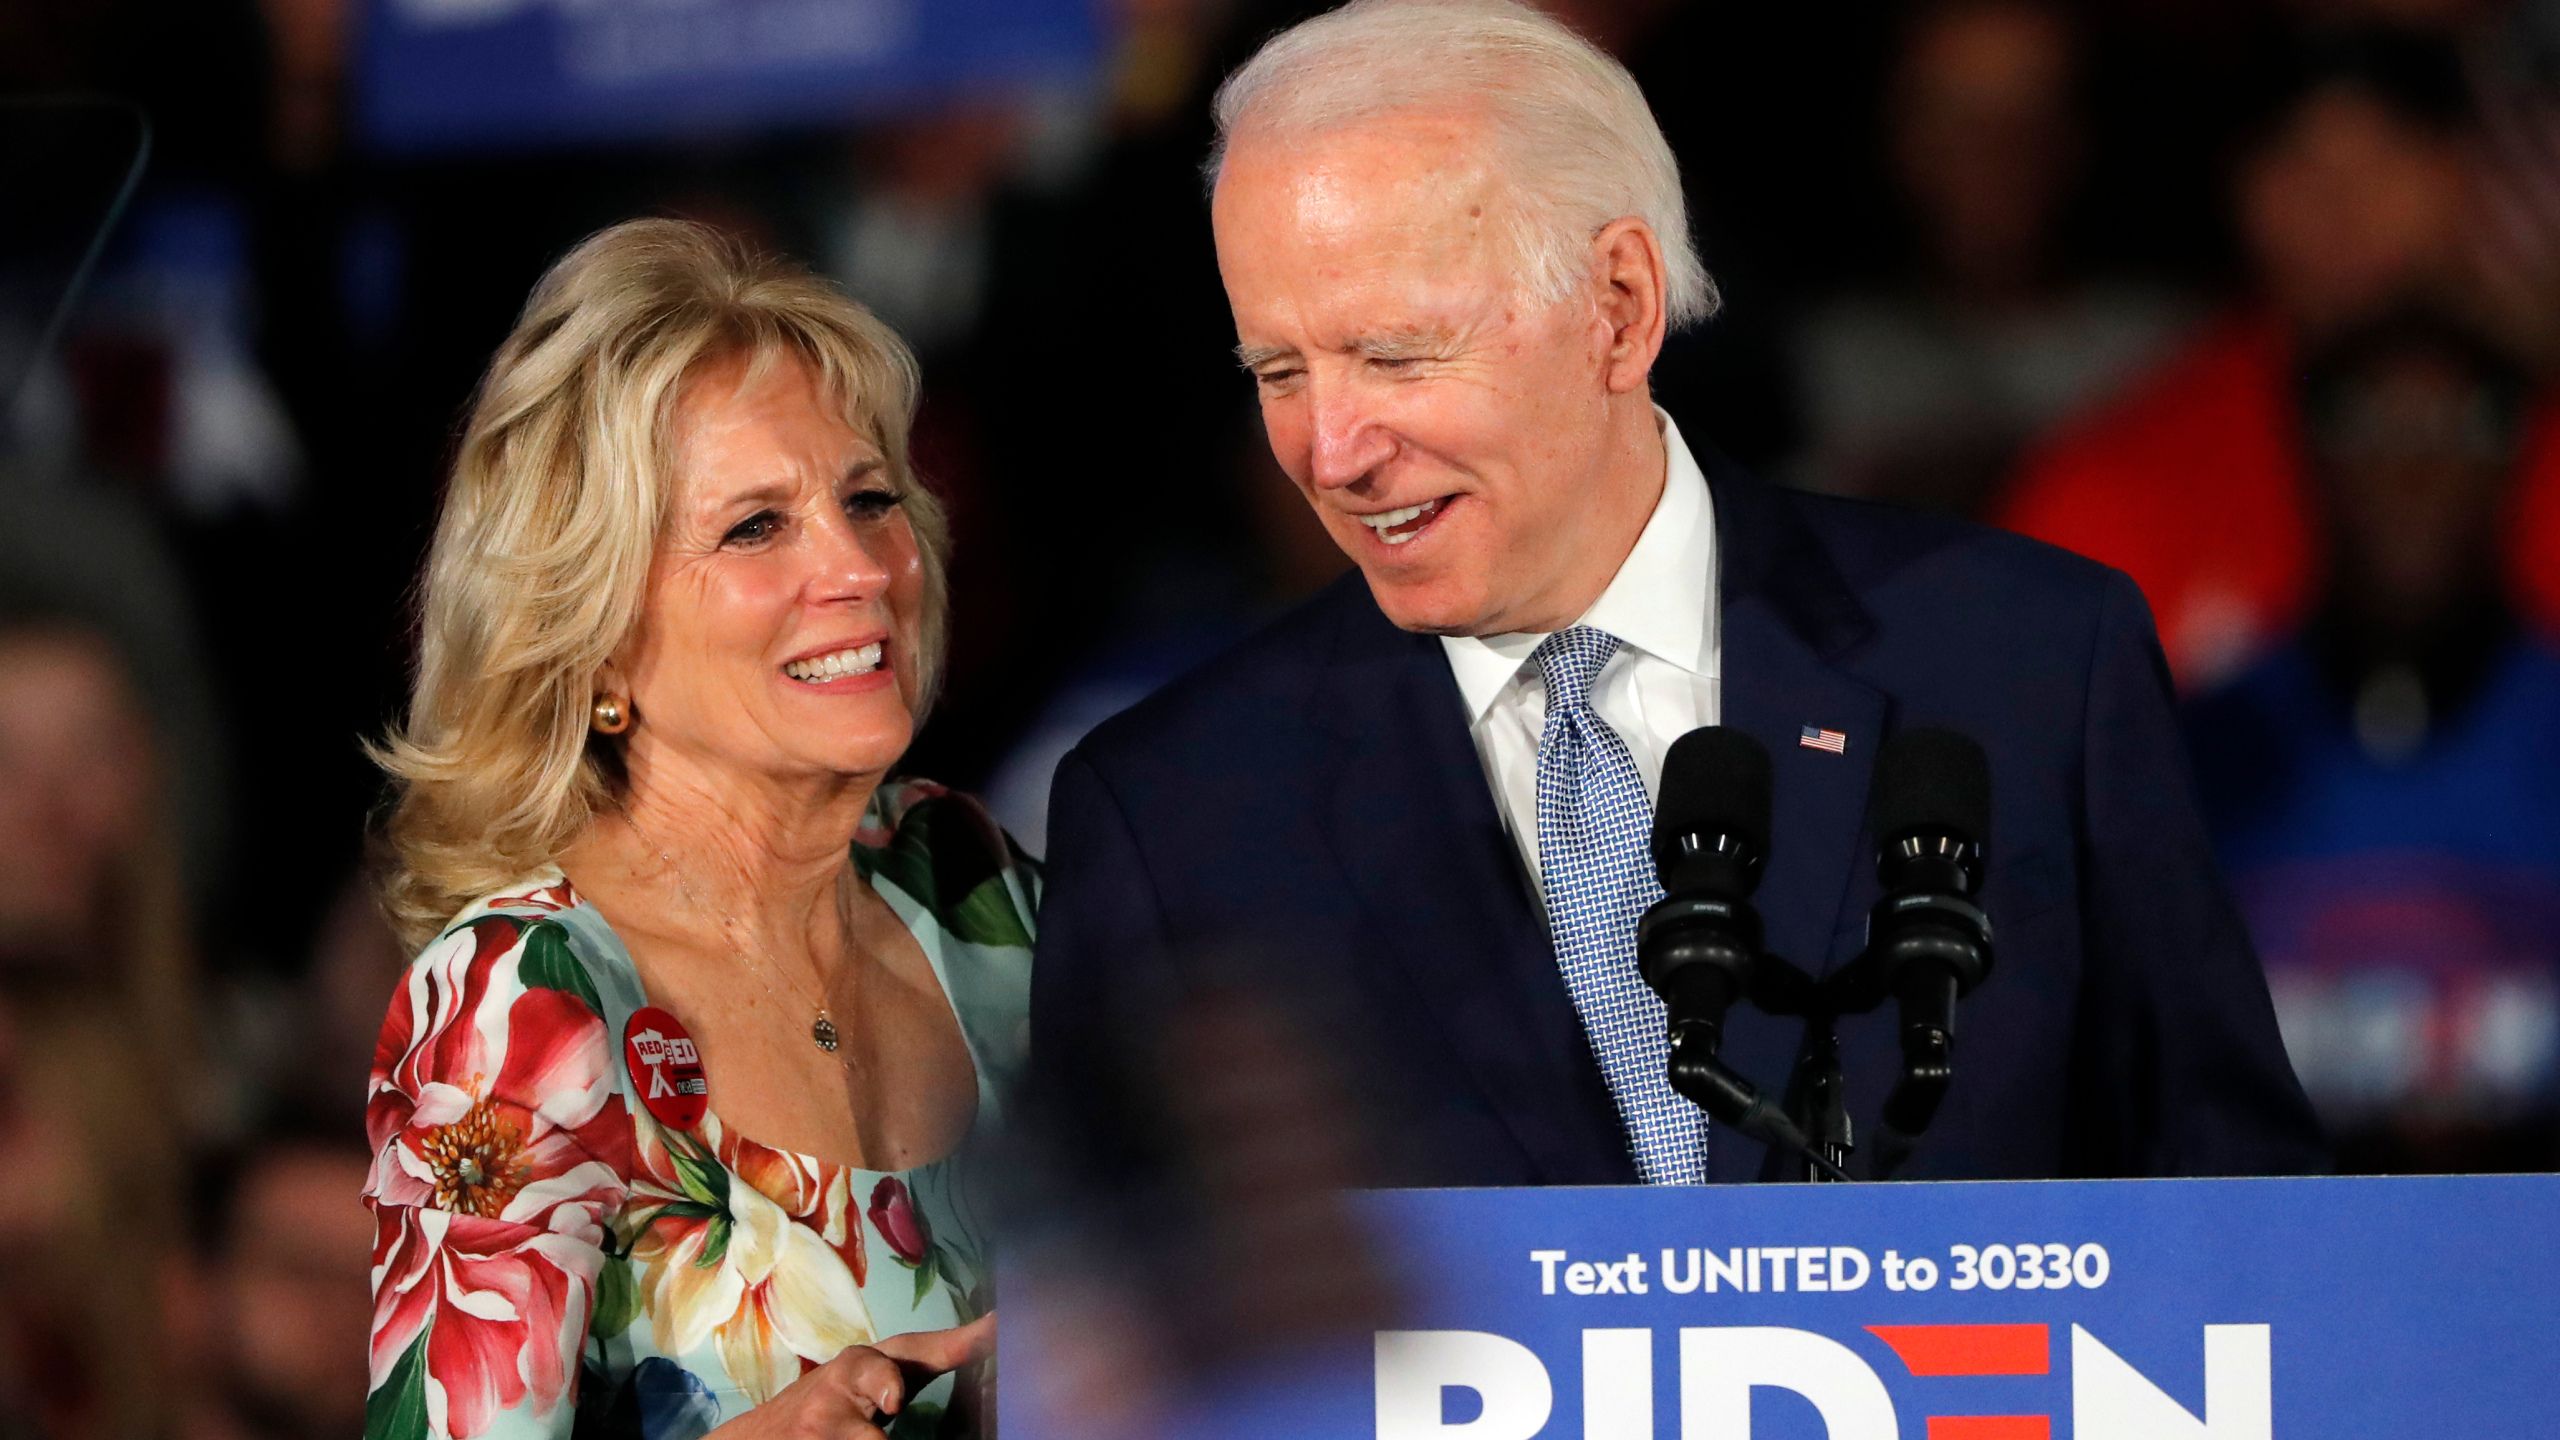 At DNC, Jill Biden pledges husband Joe will 'make us whole'